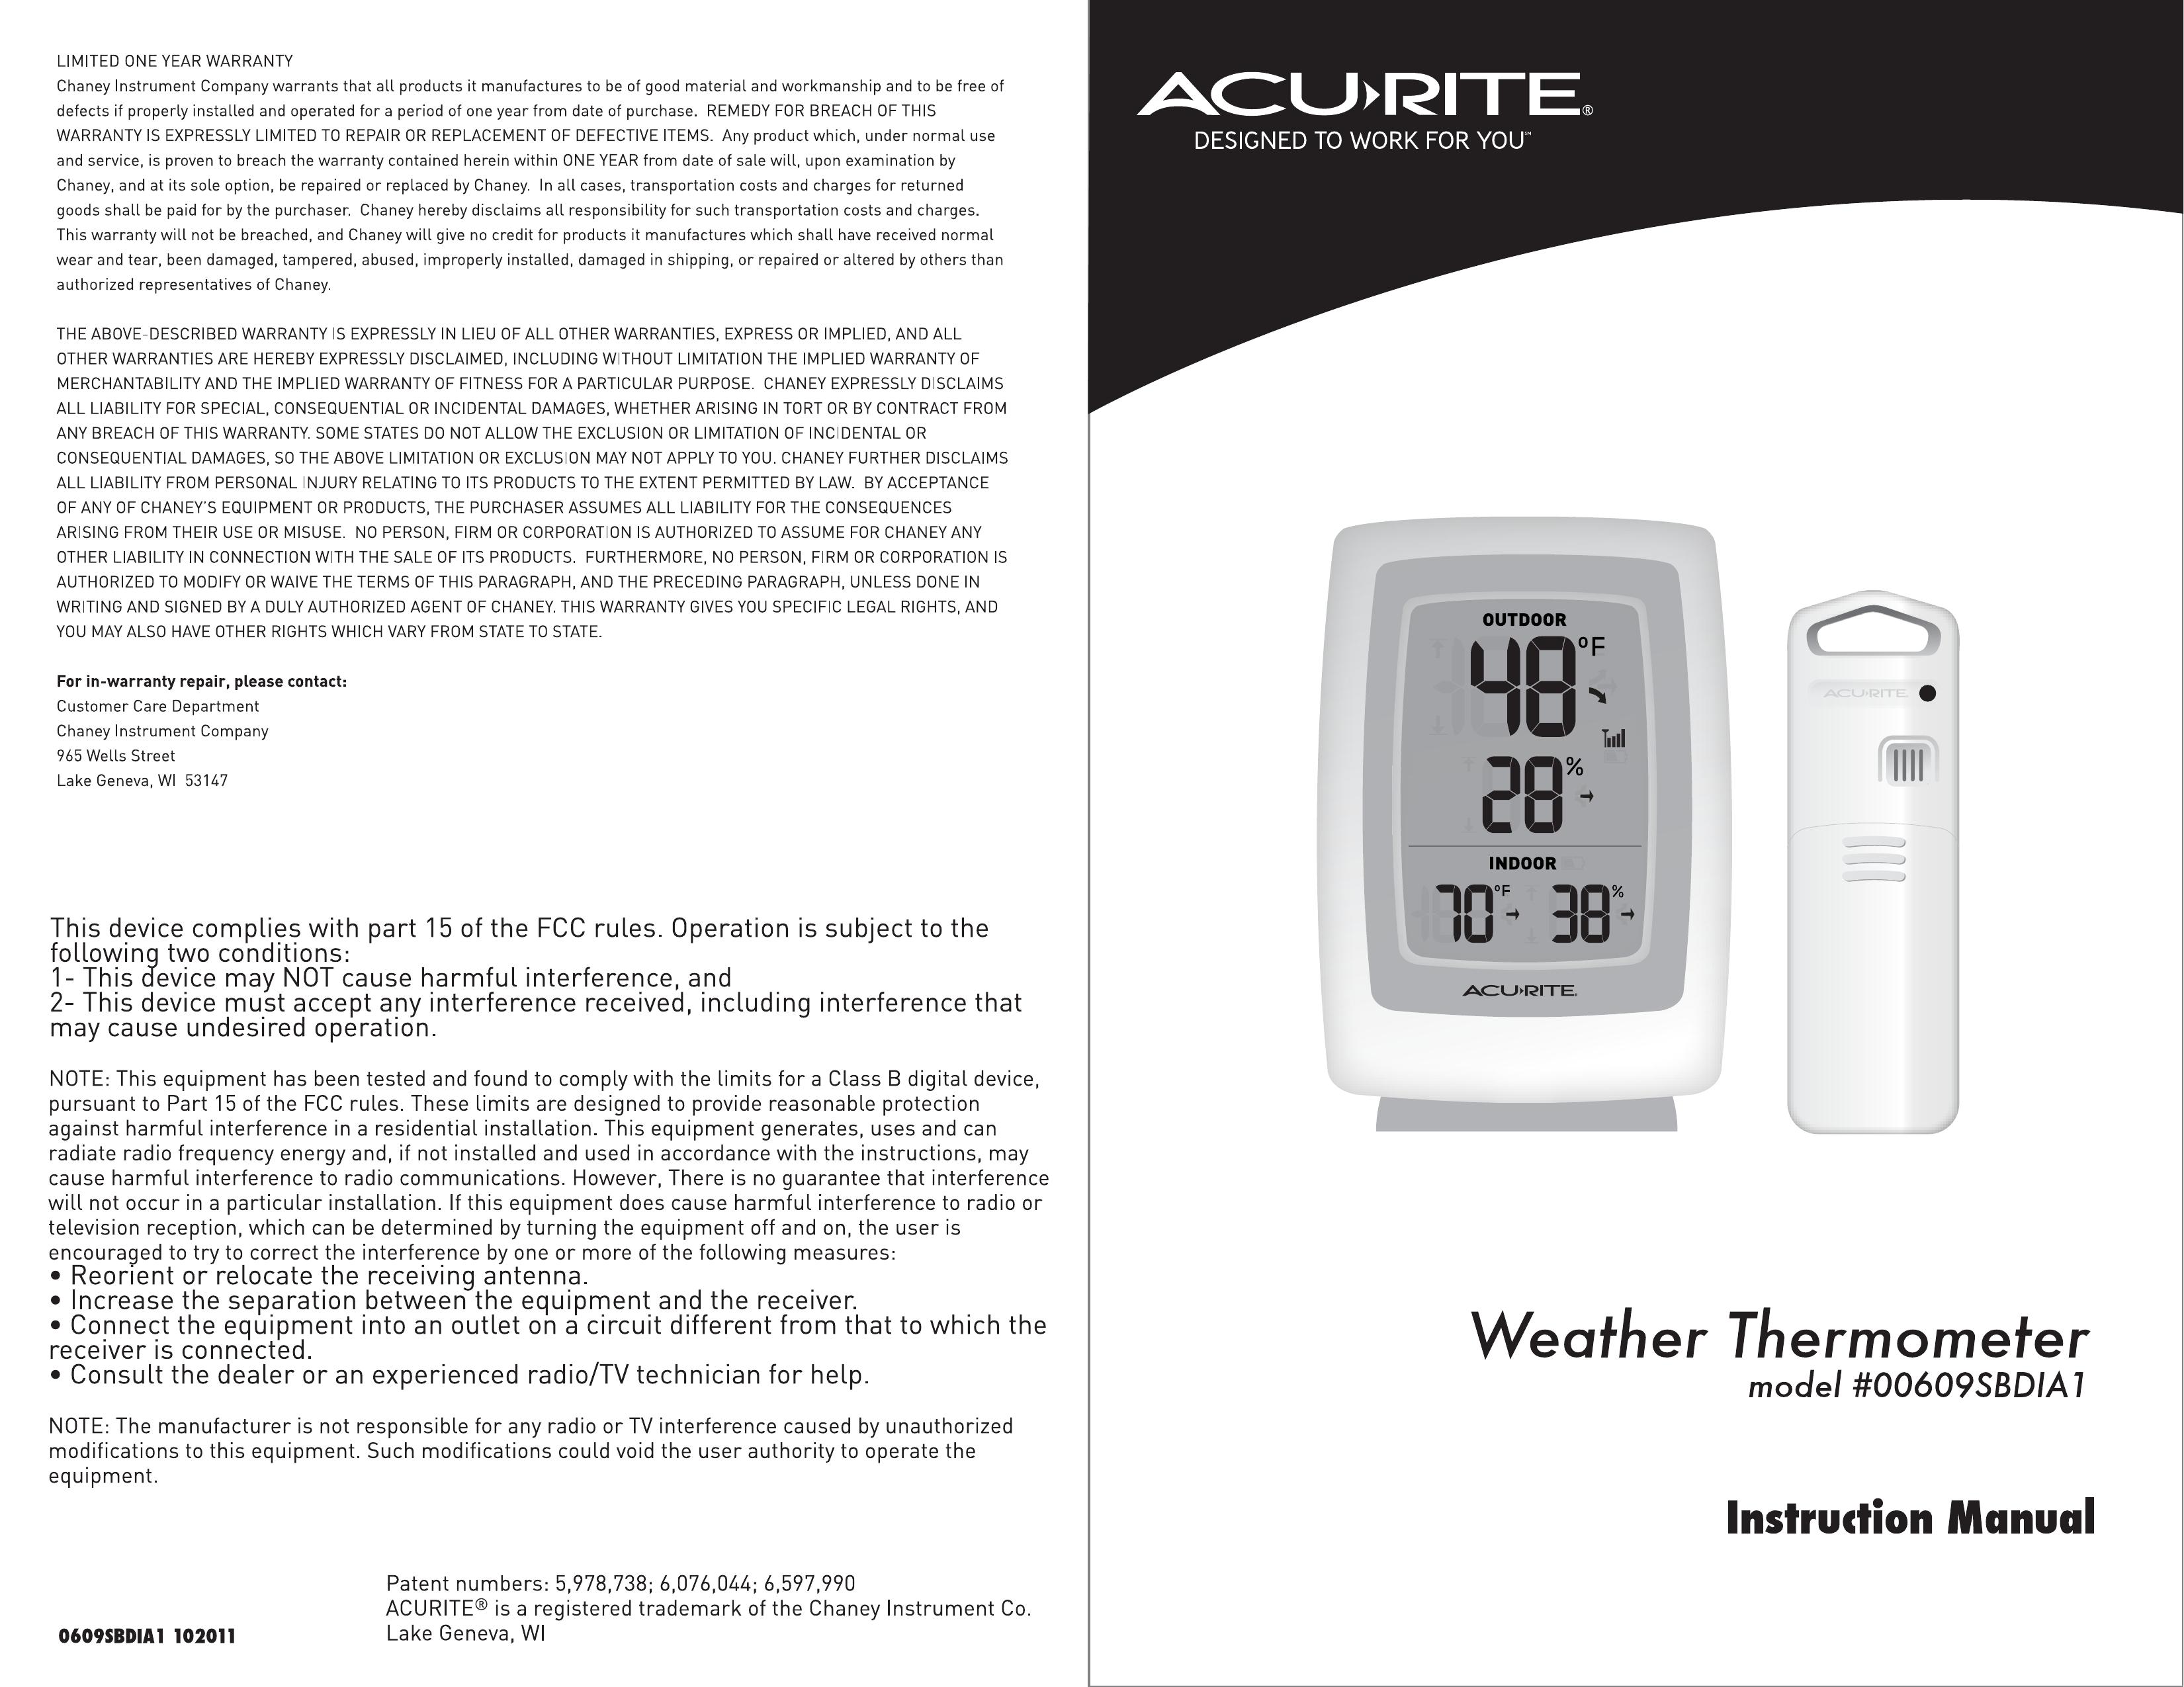 Acu-Rite #00609SBDIA1 Thermometer User Manual